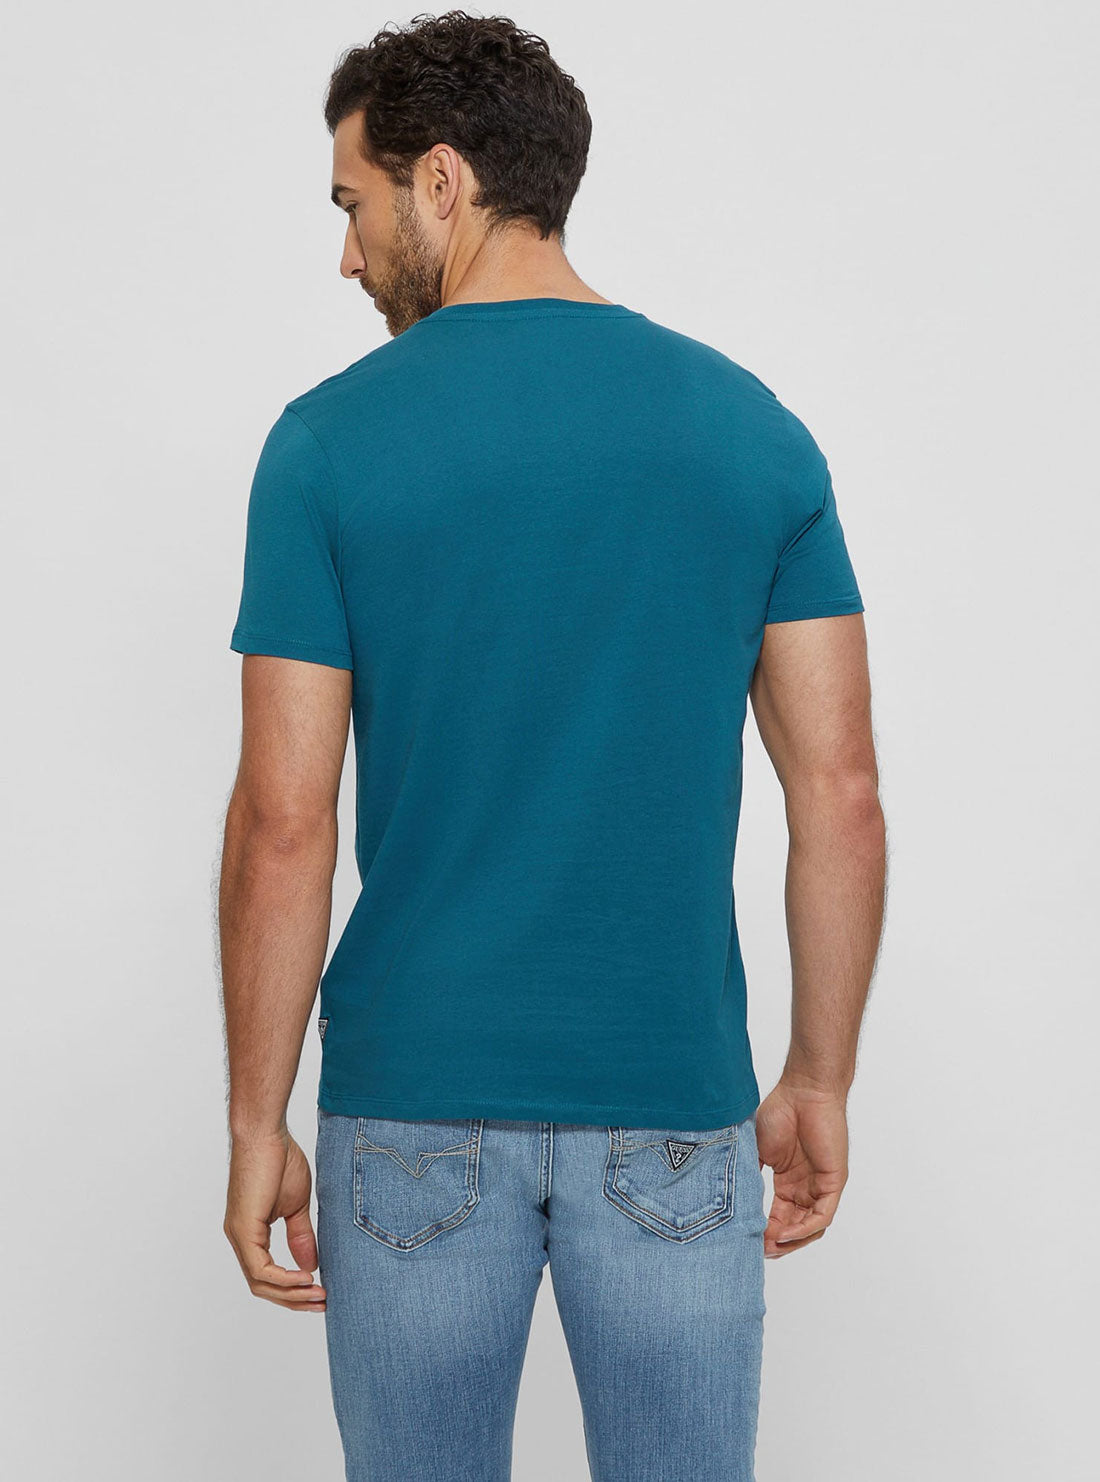 Teal Blue Iridescent Logo T-Shirt | GUESS Men's Apparel | back view